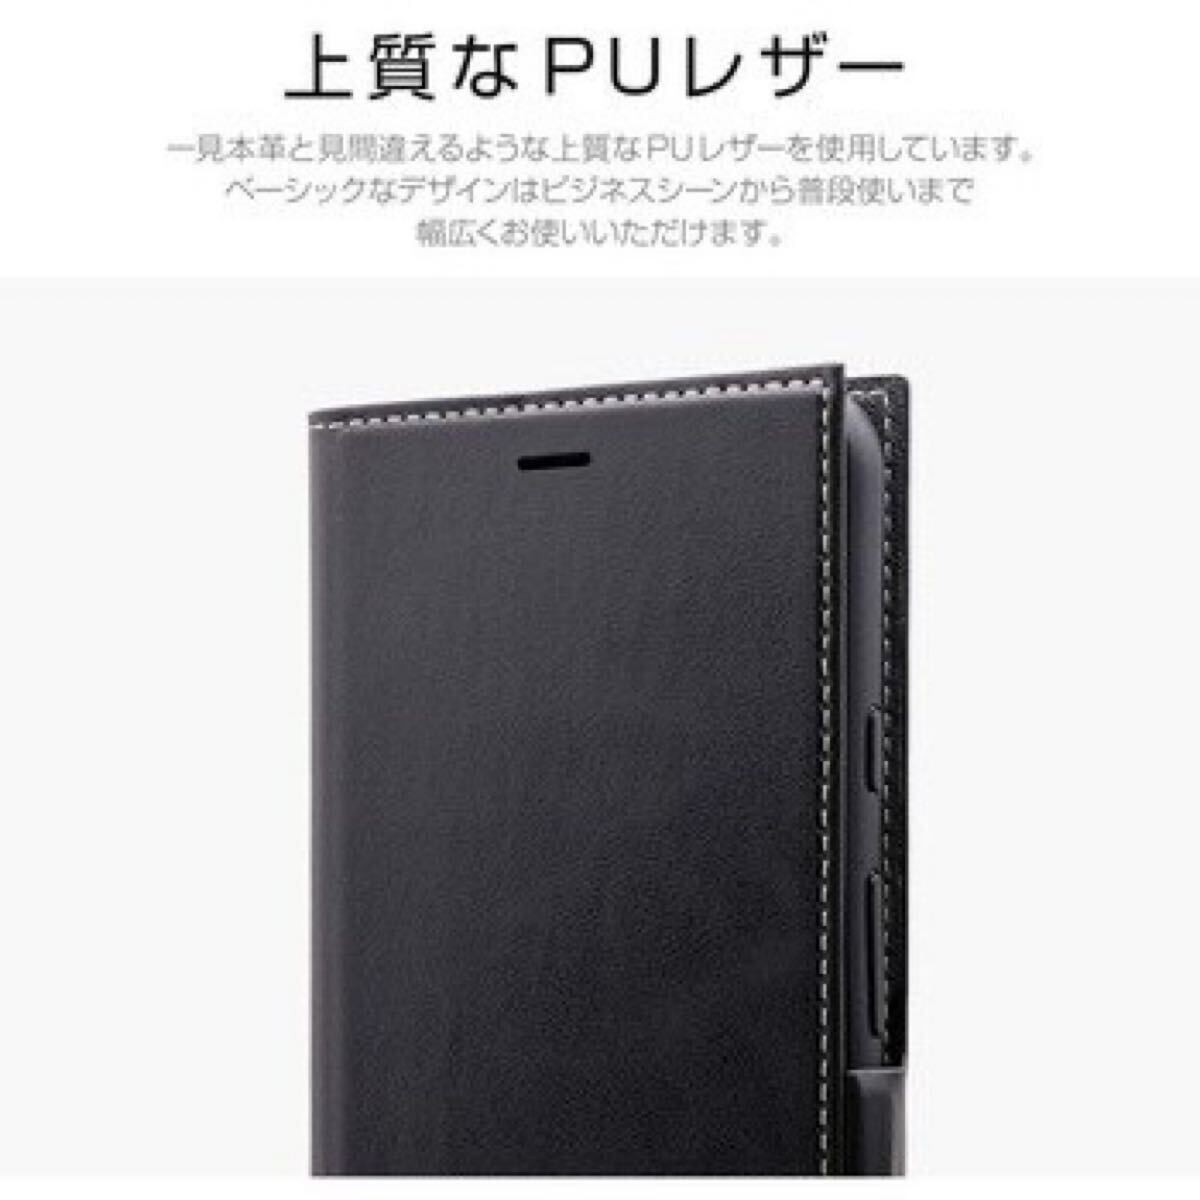 Pixel 4 XL 黒 手帳型ケース a2 スタンド機能 カードポケット LEPLUS LP-19WP2PRIBK Google ブラック MSソリューションズ _画像5